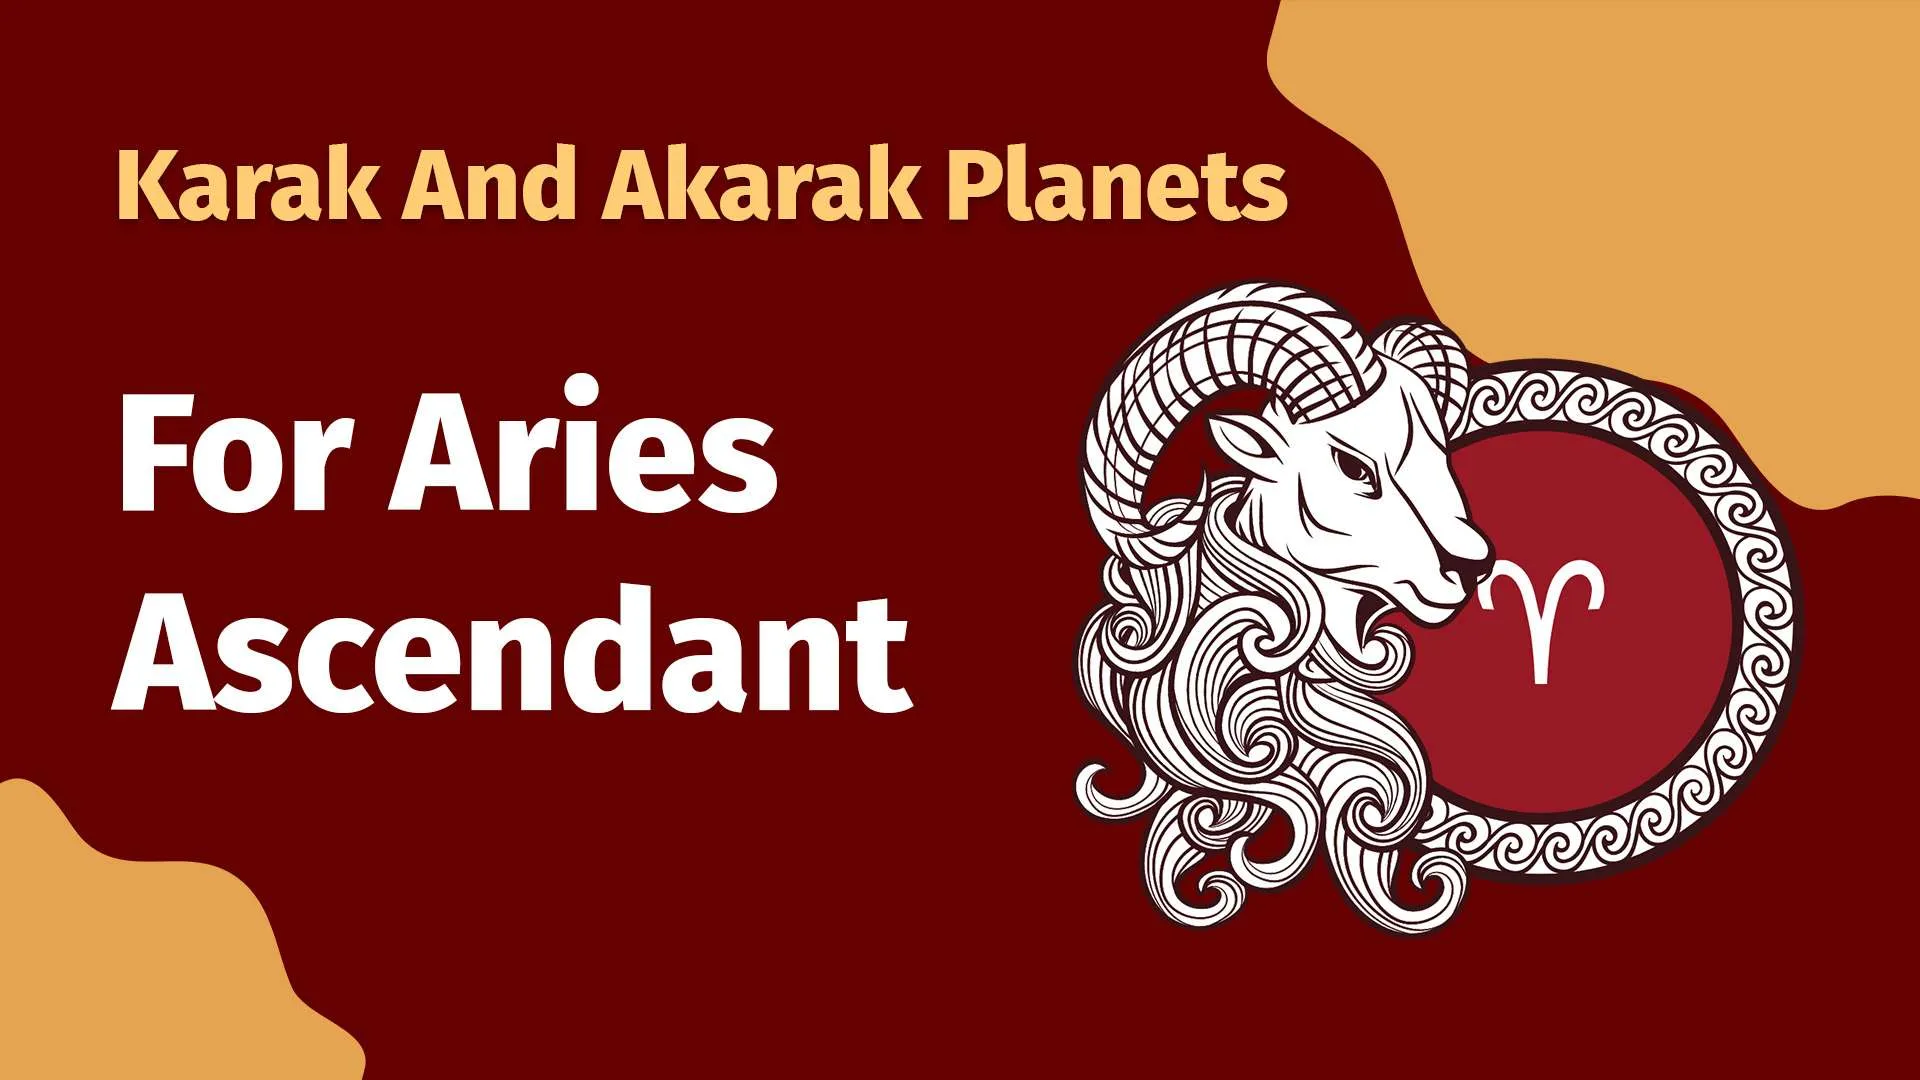 Karak and Akarak planets for Aries Ascendants